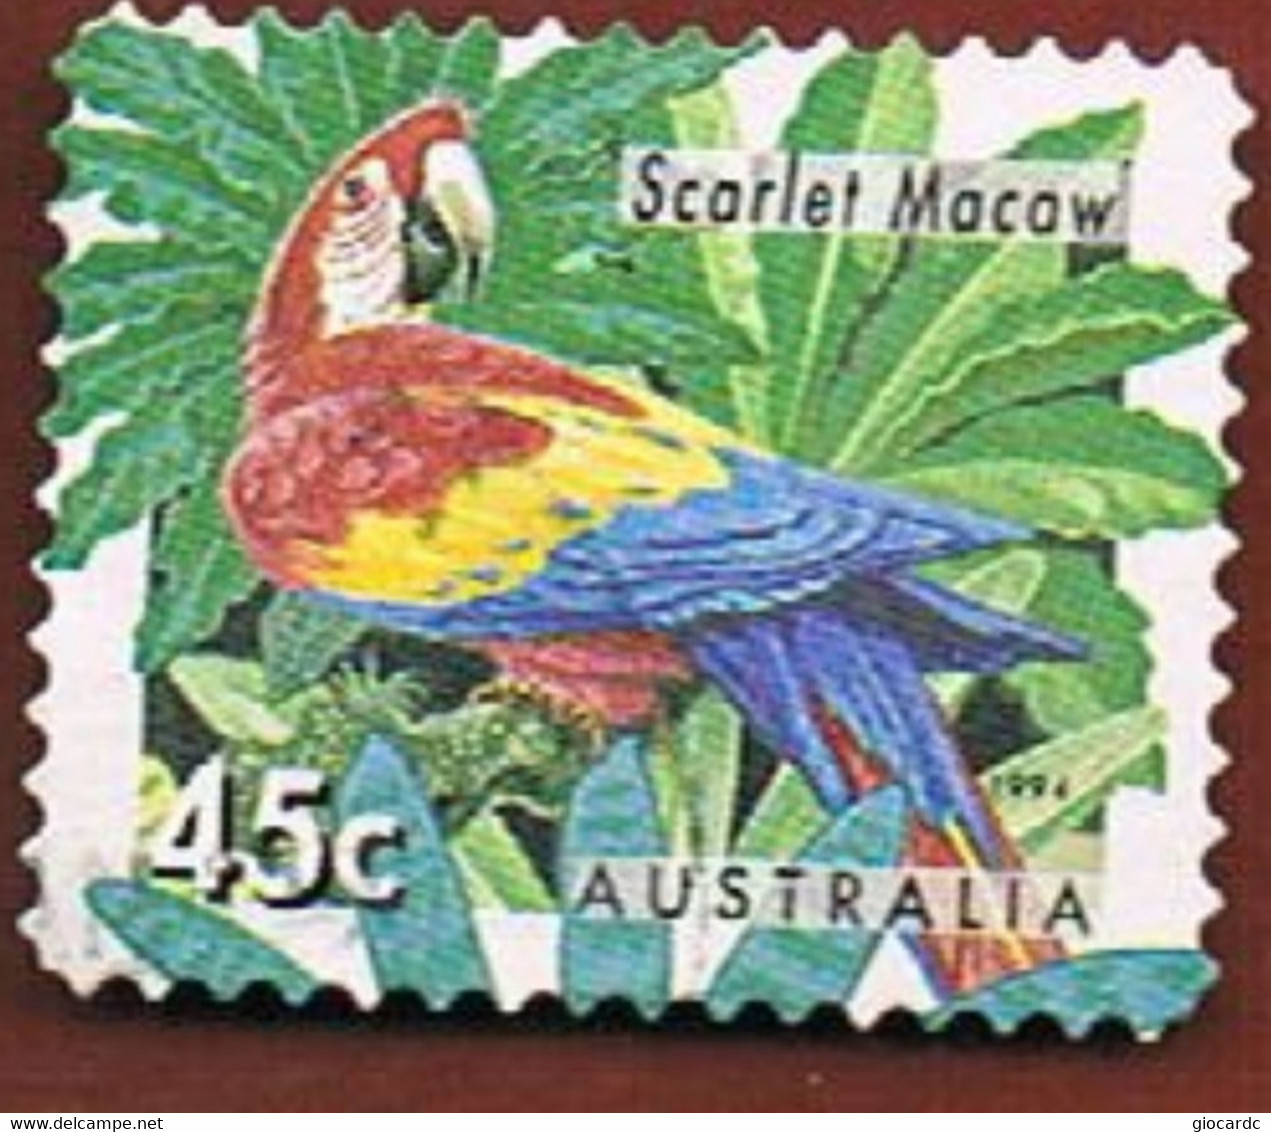 AUSTRALIA  -  SG 1485  -      1994  BIRDS: SCARLET MACAW   -       USED - Gebraucht